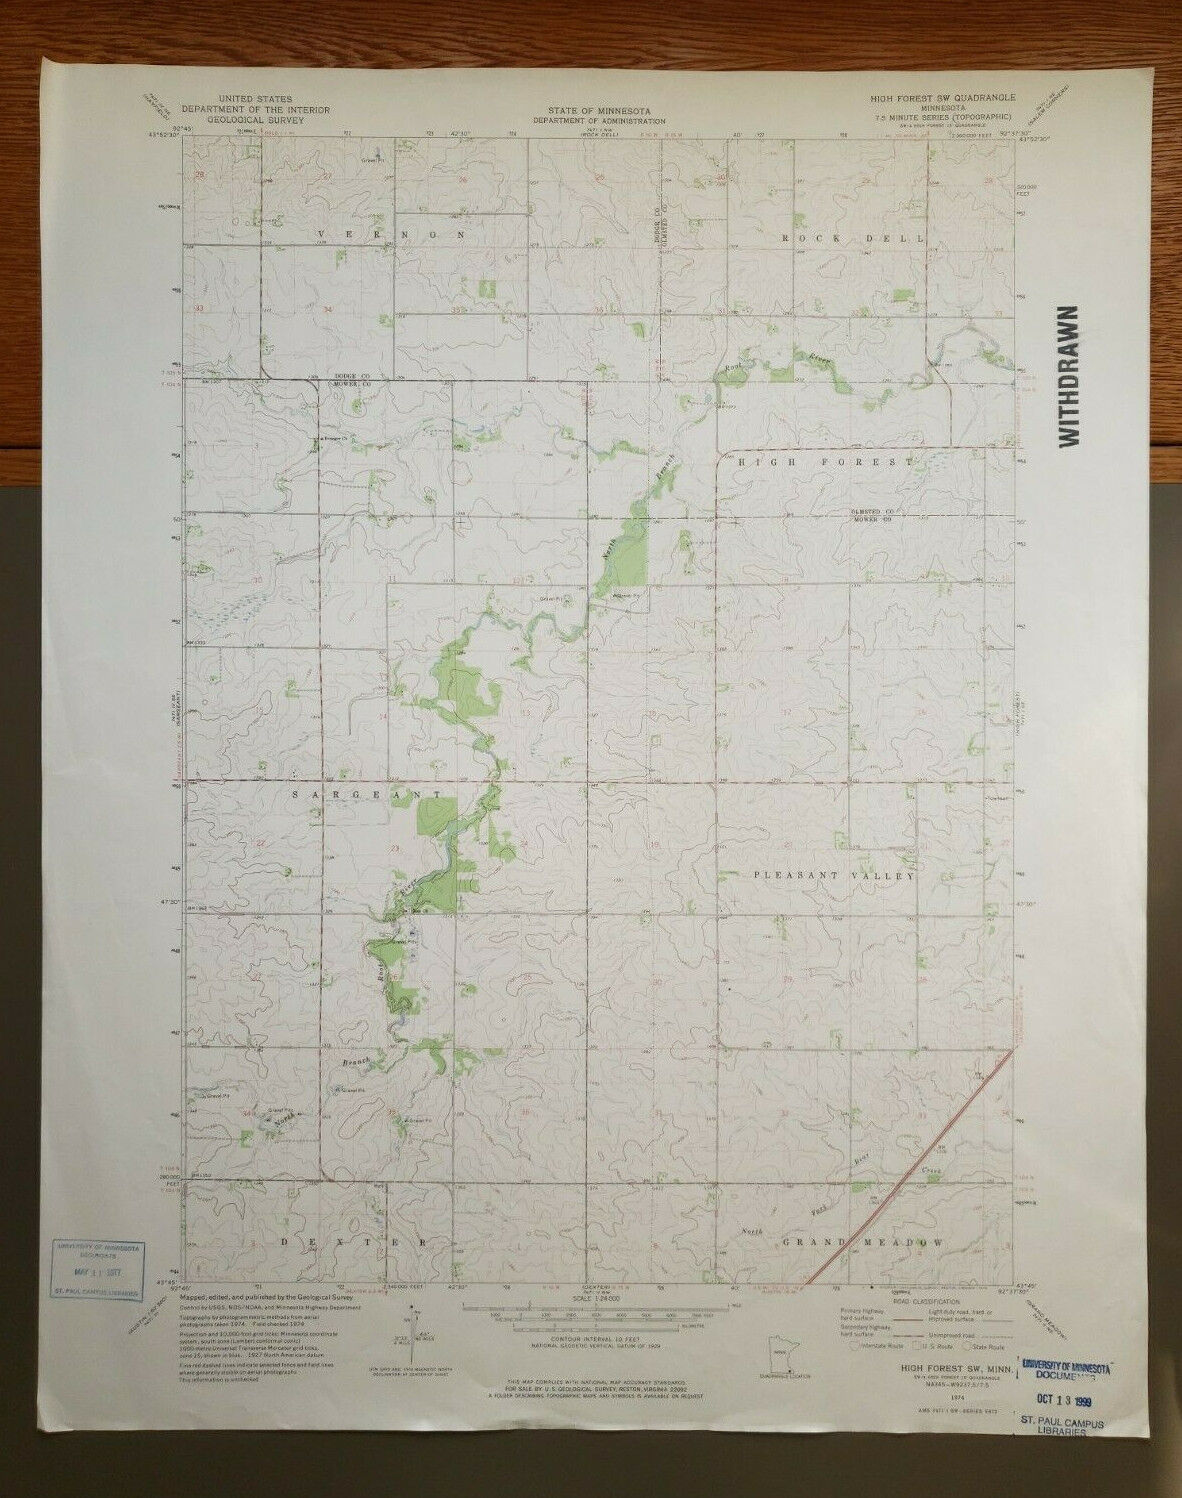 High Forest SW, Minnesota Original Vintage 1974 USGS Topo Map 27" x 22" 